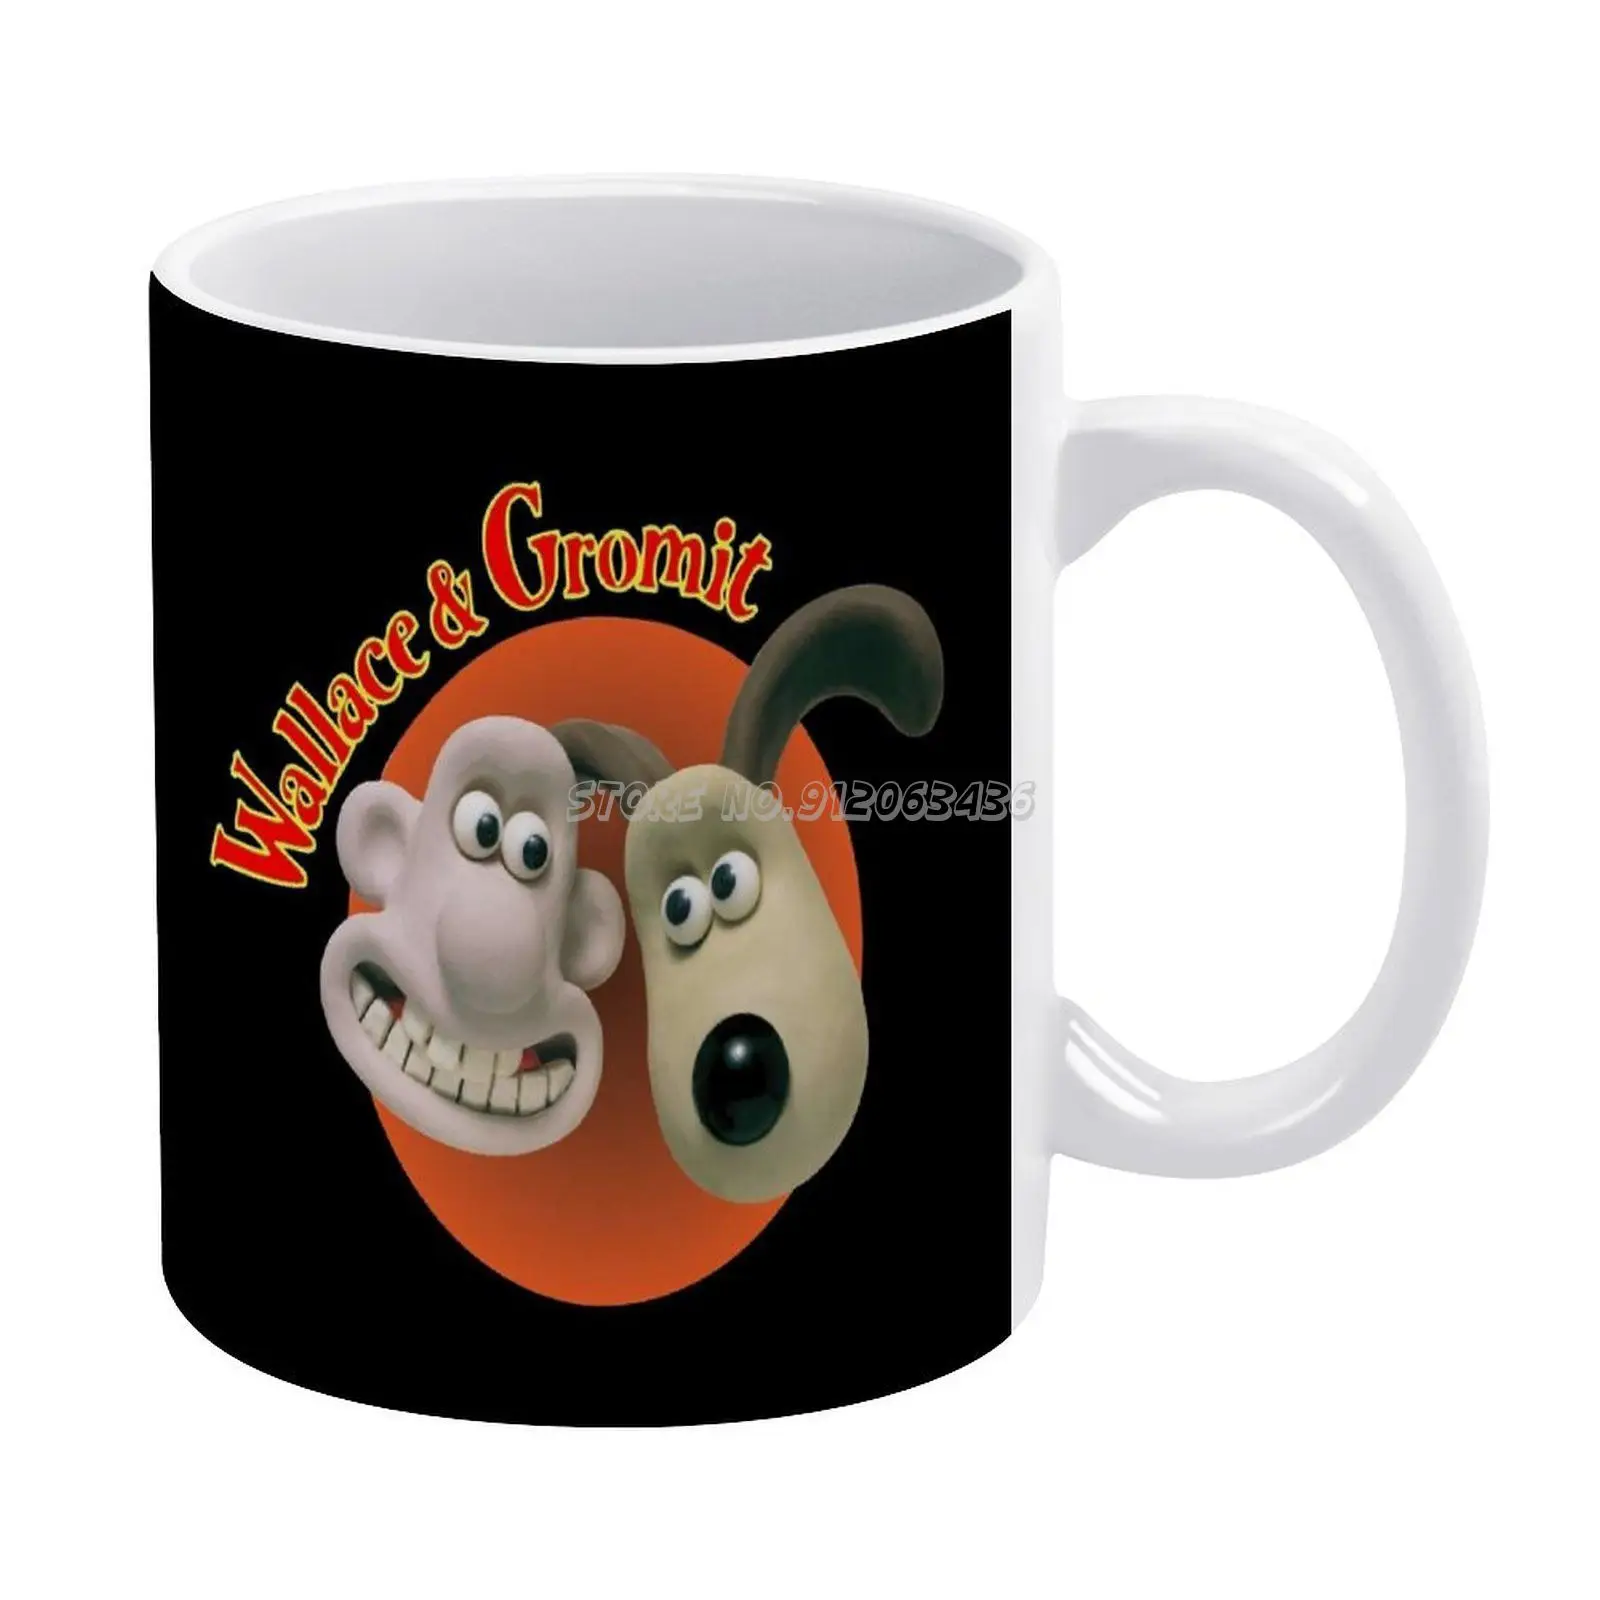 Walce And Gomet Coffee Mugs Ceramic Personalized Mugs 11 Oz White Mug Tea Milk Cup Drinkware Travel Mug Gromit Film Movie Cartoo